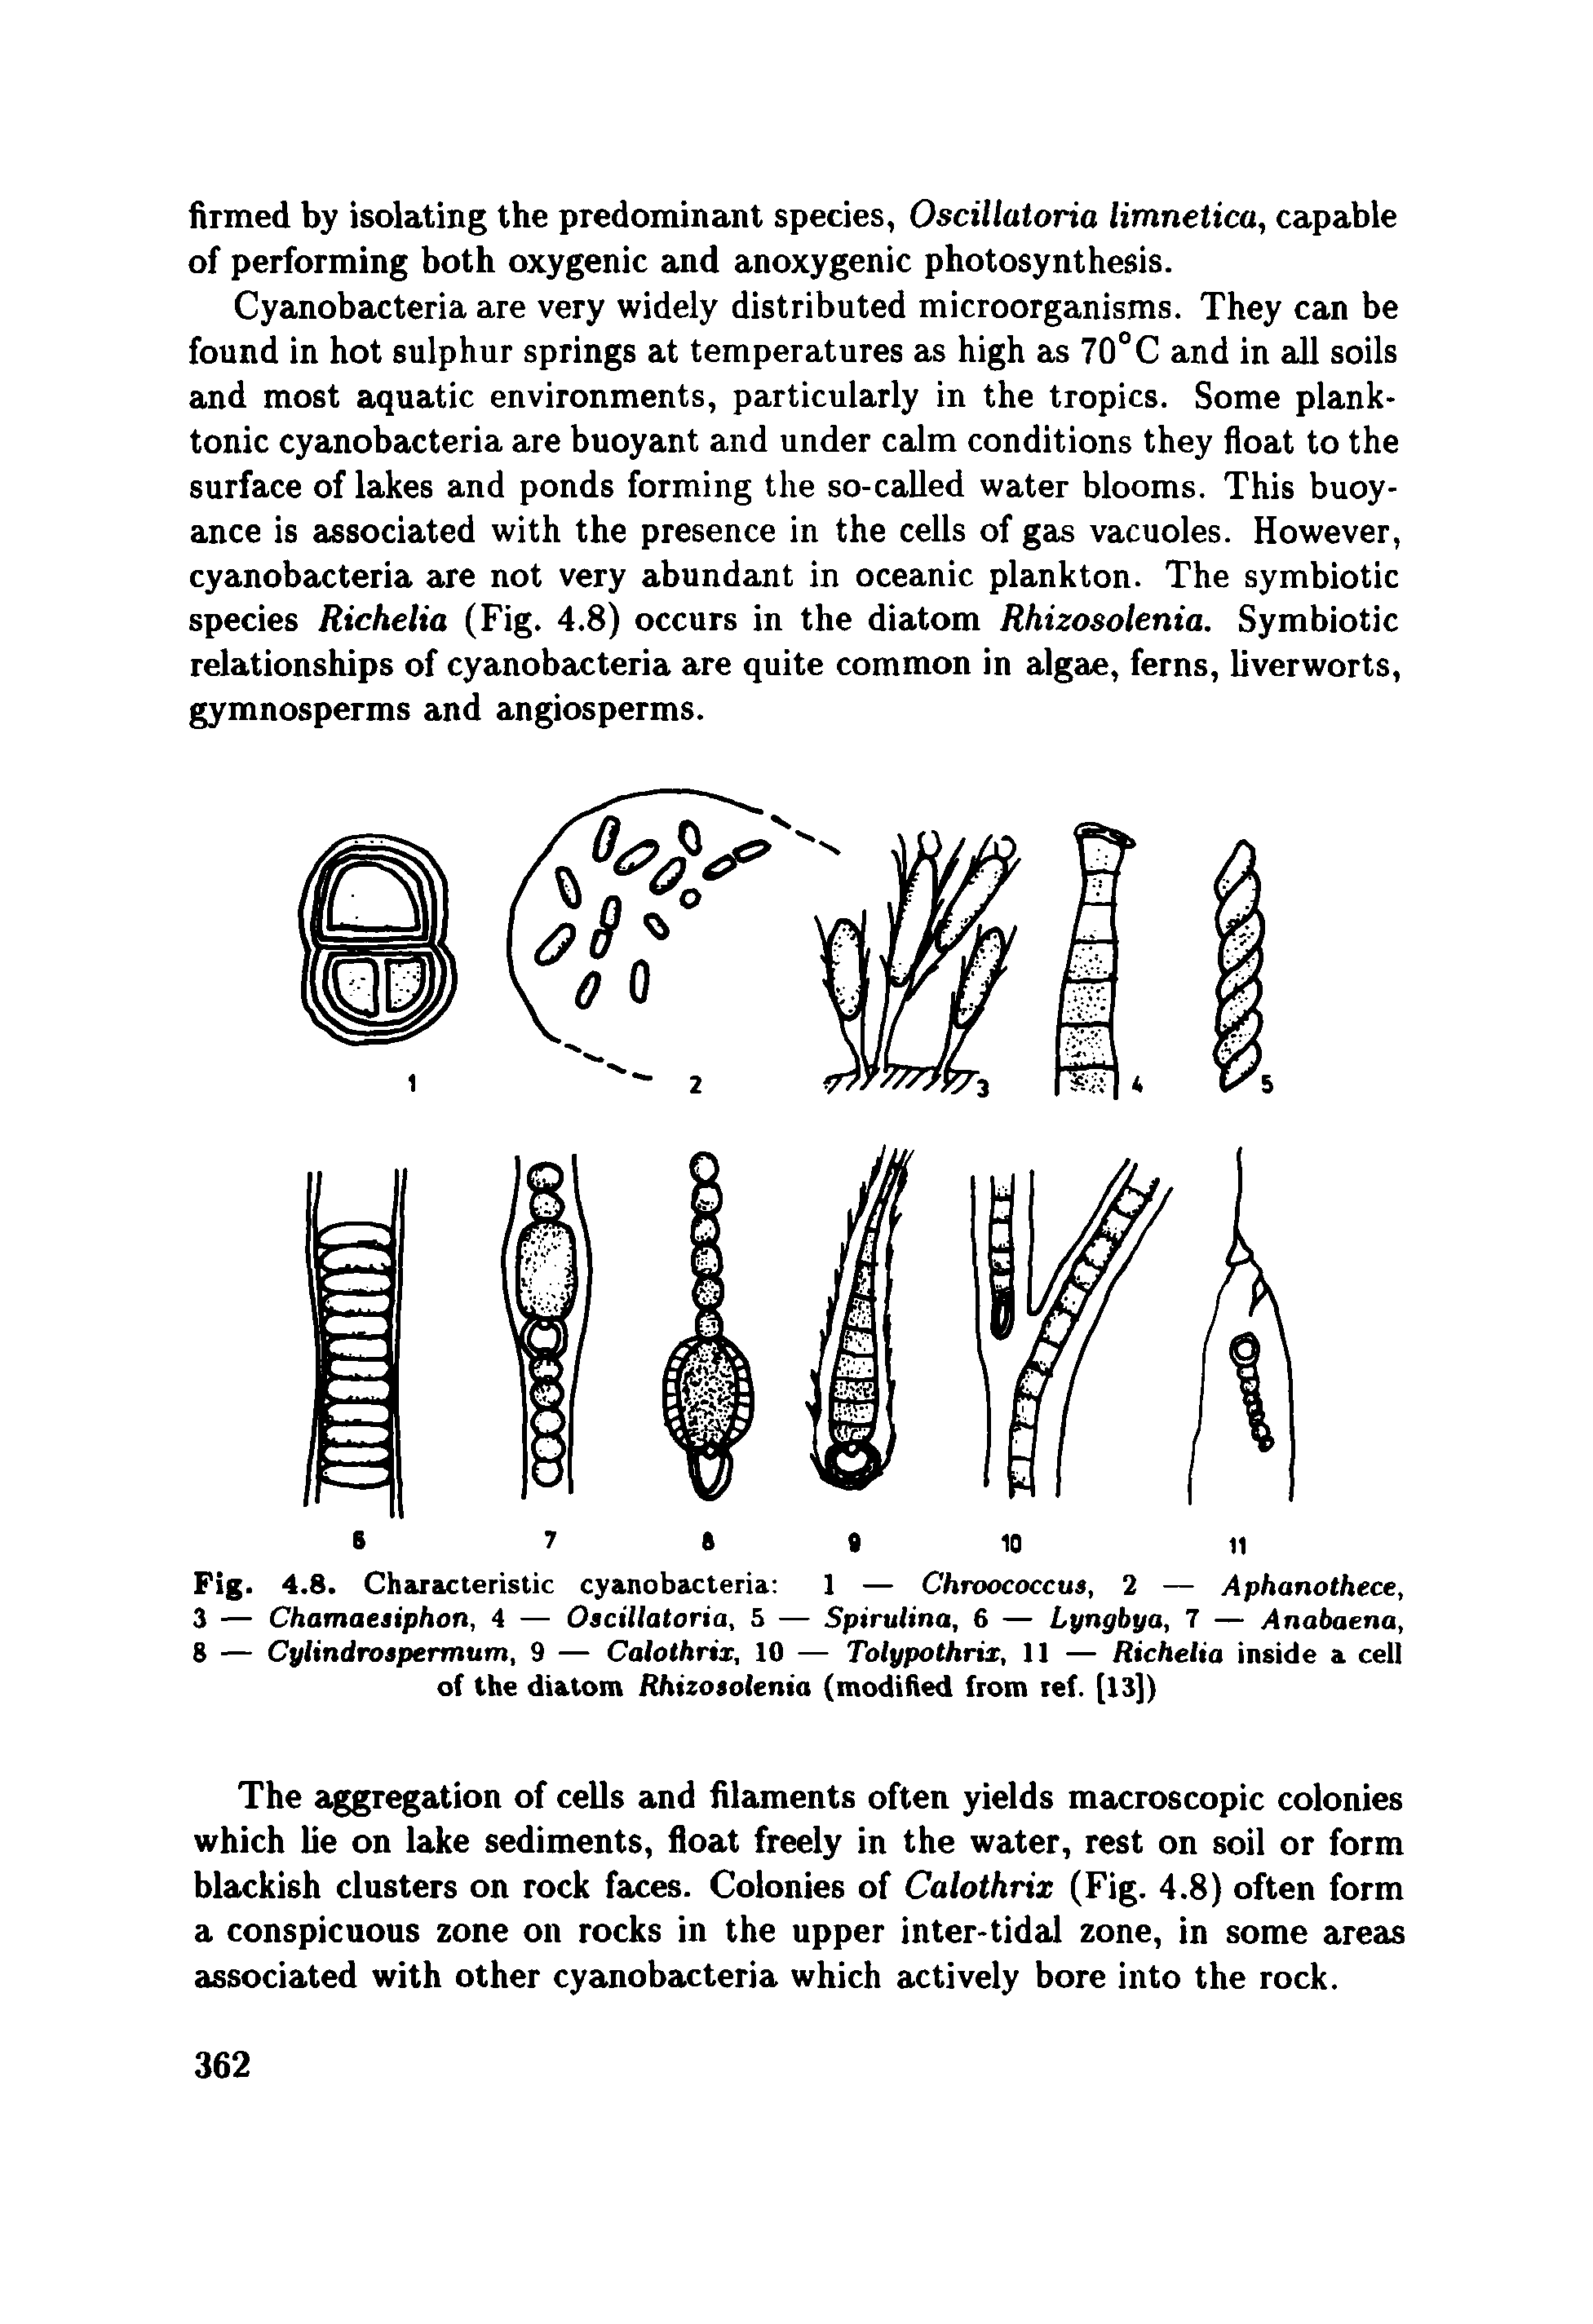 Fig. 4.8. Characteristic cyanobacteria 1 — Chroococcus, 2 — Aphanothece, 3 — Chamaeaiphon, 4 — Oscillatoria, 5 — Spirulina, 6 — Lyngbya, 7 — Anabaena, 8 — Cylindrospermum, 9 — Calothrix, 10 — Tolypothrix, 11 — Richelia inside a cell of the diatom Rhizosolenia (modified from ref. [13])...